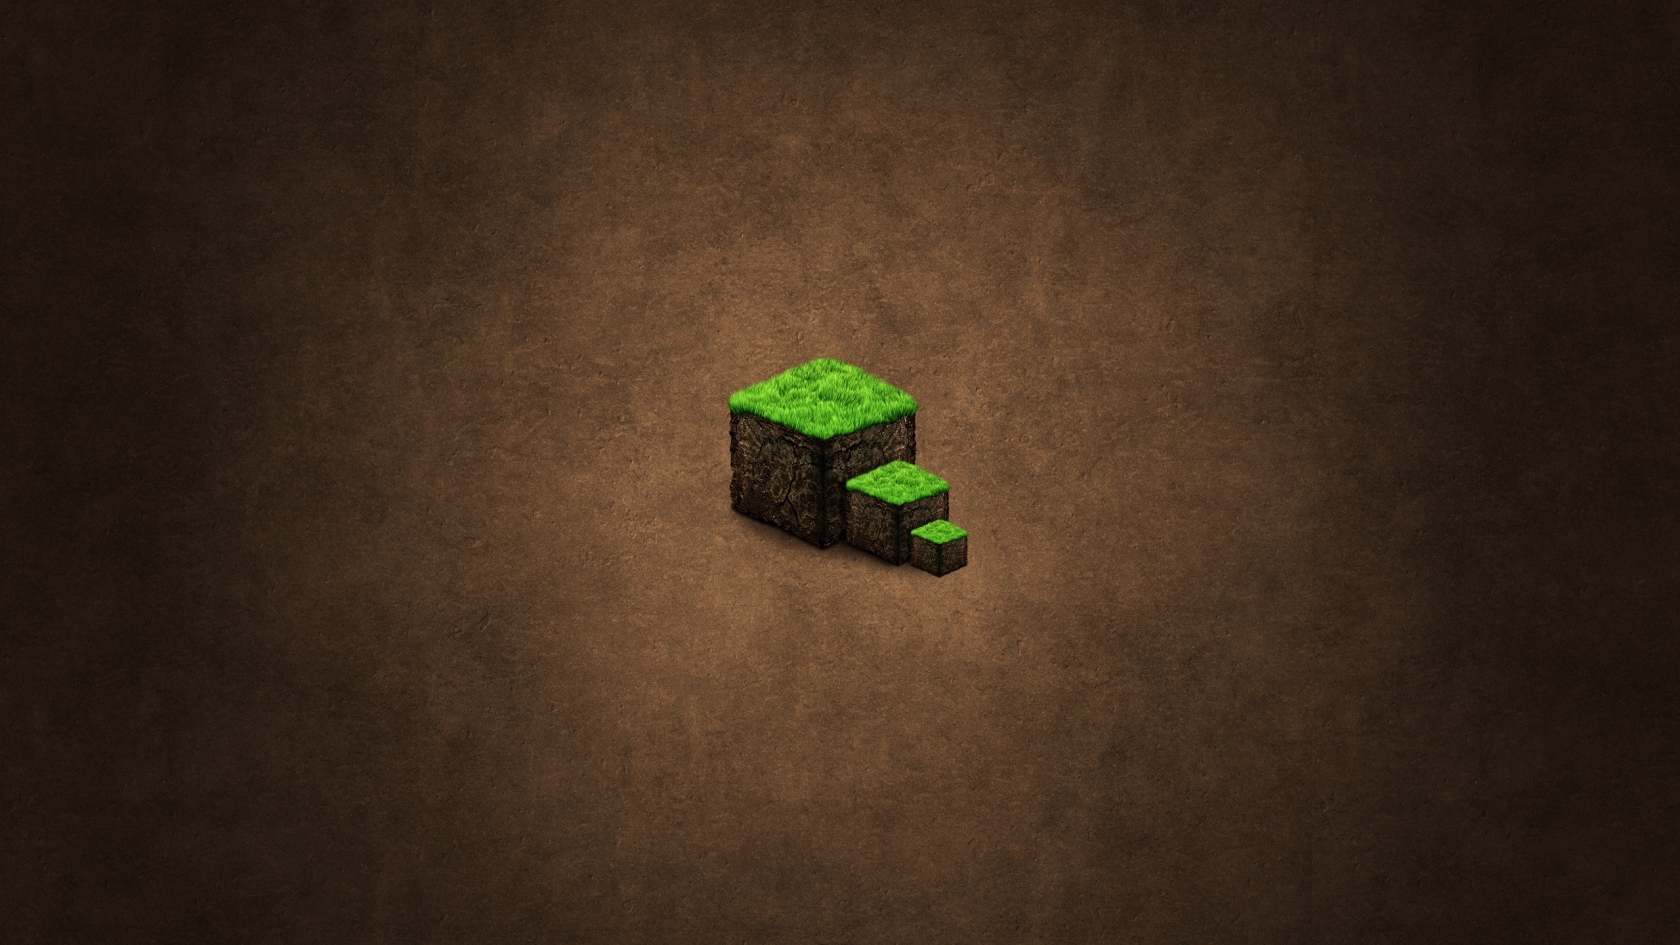 Minecraft Green Cubes for 1680 x 945 HDTV resolution